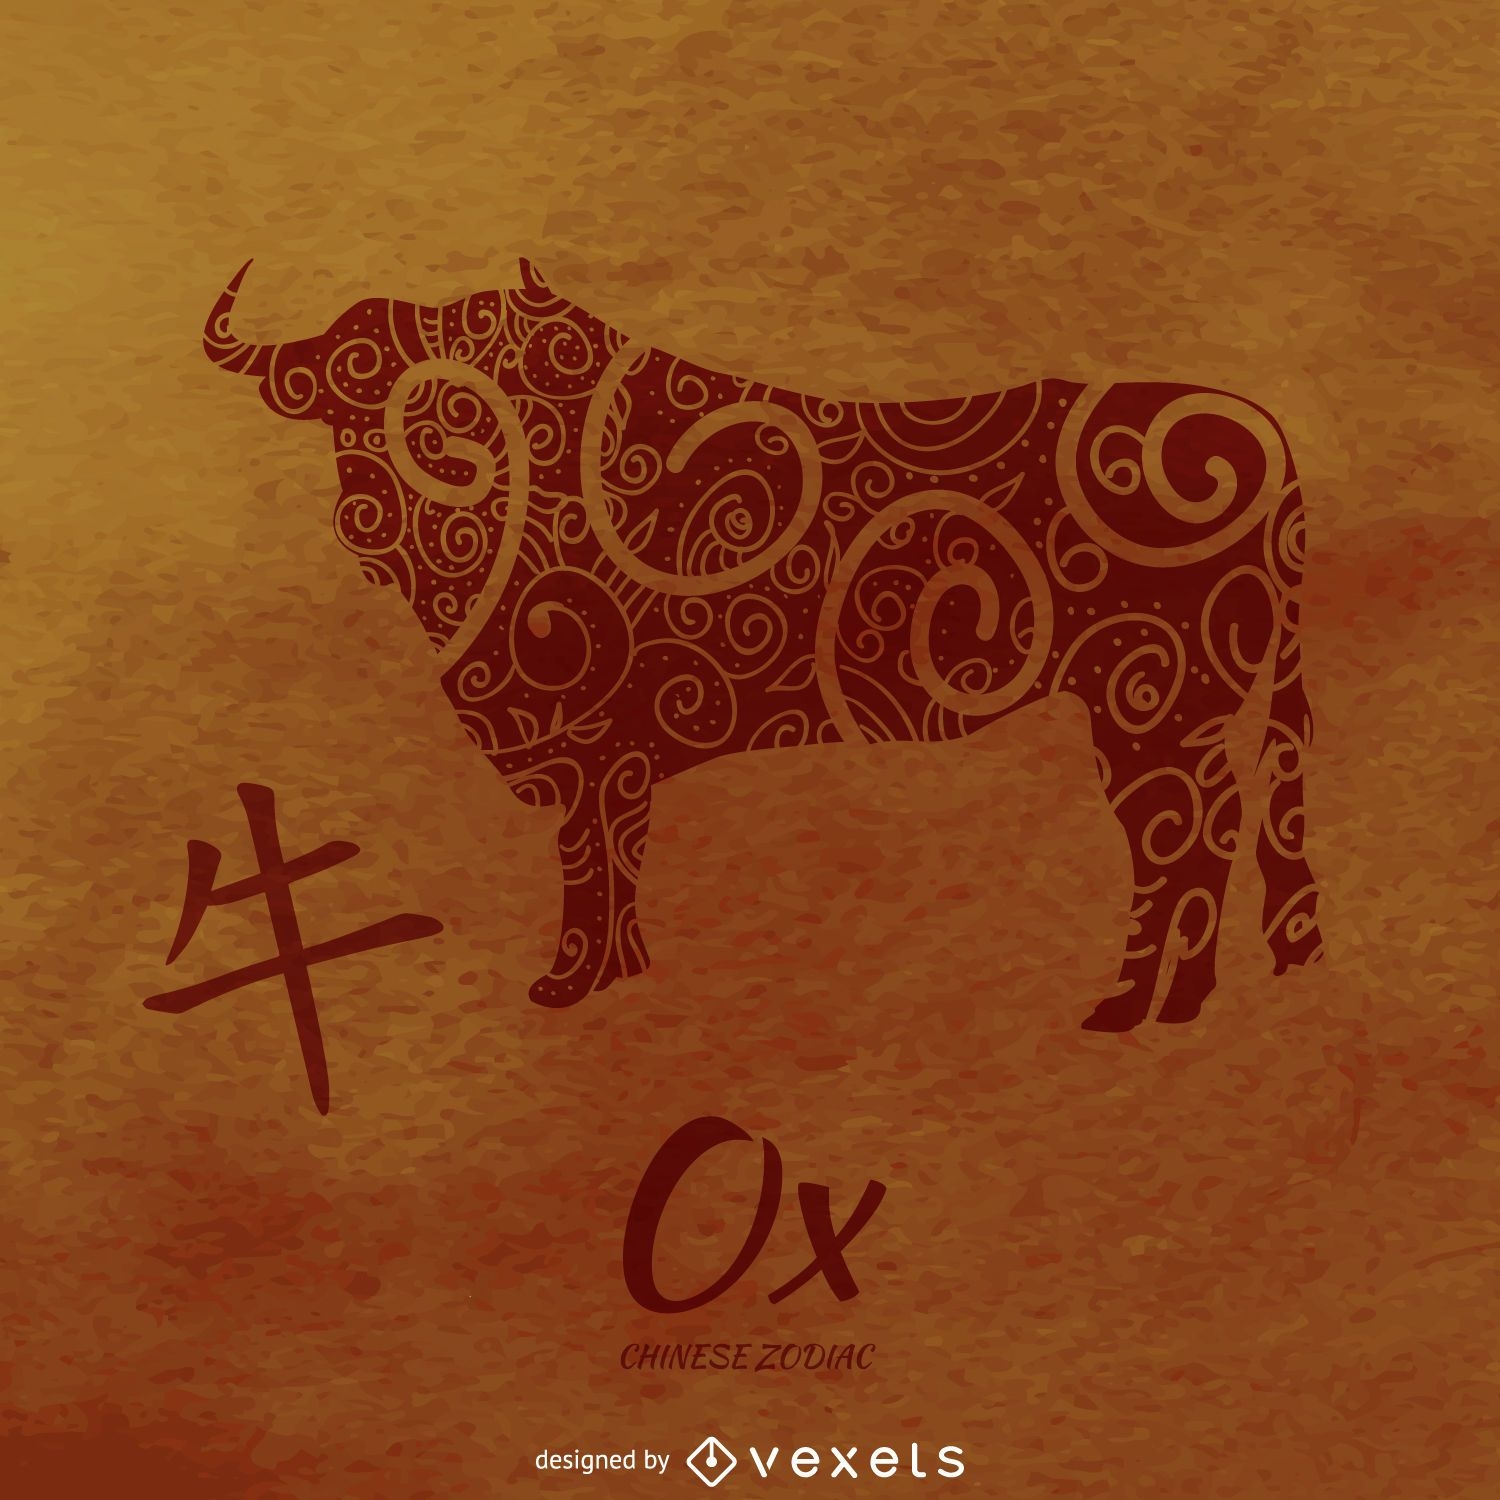 Ox drawing chinese horoscope